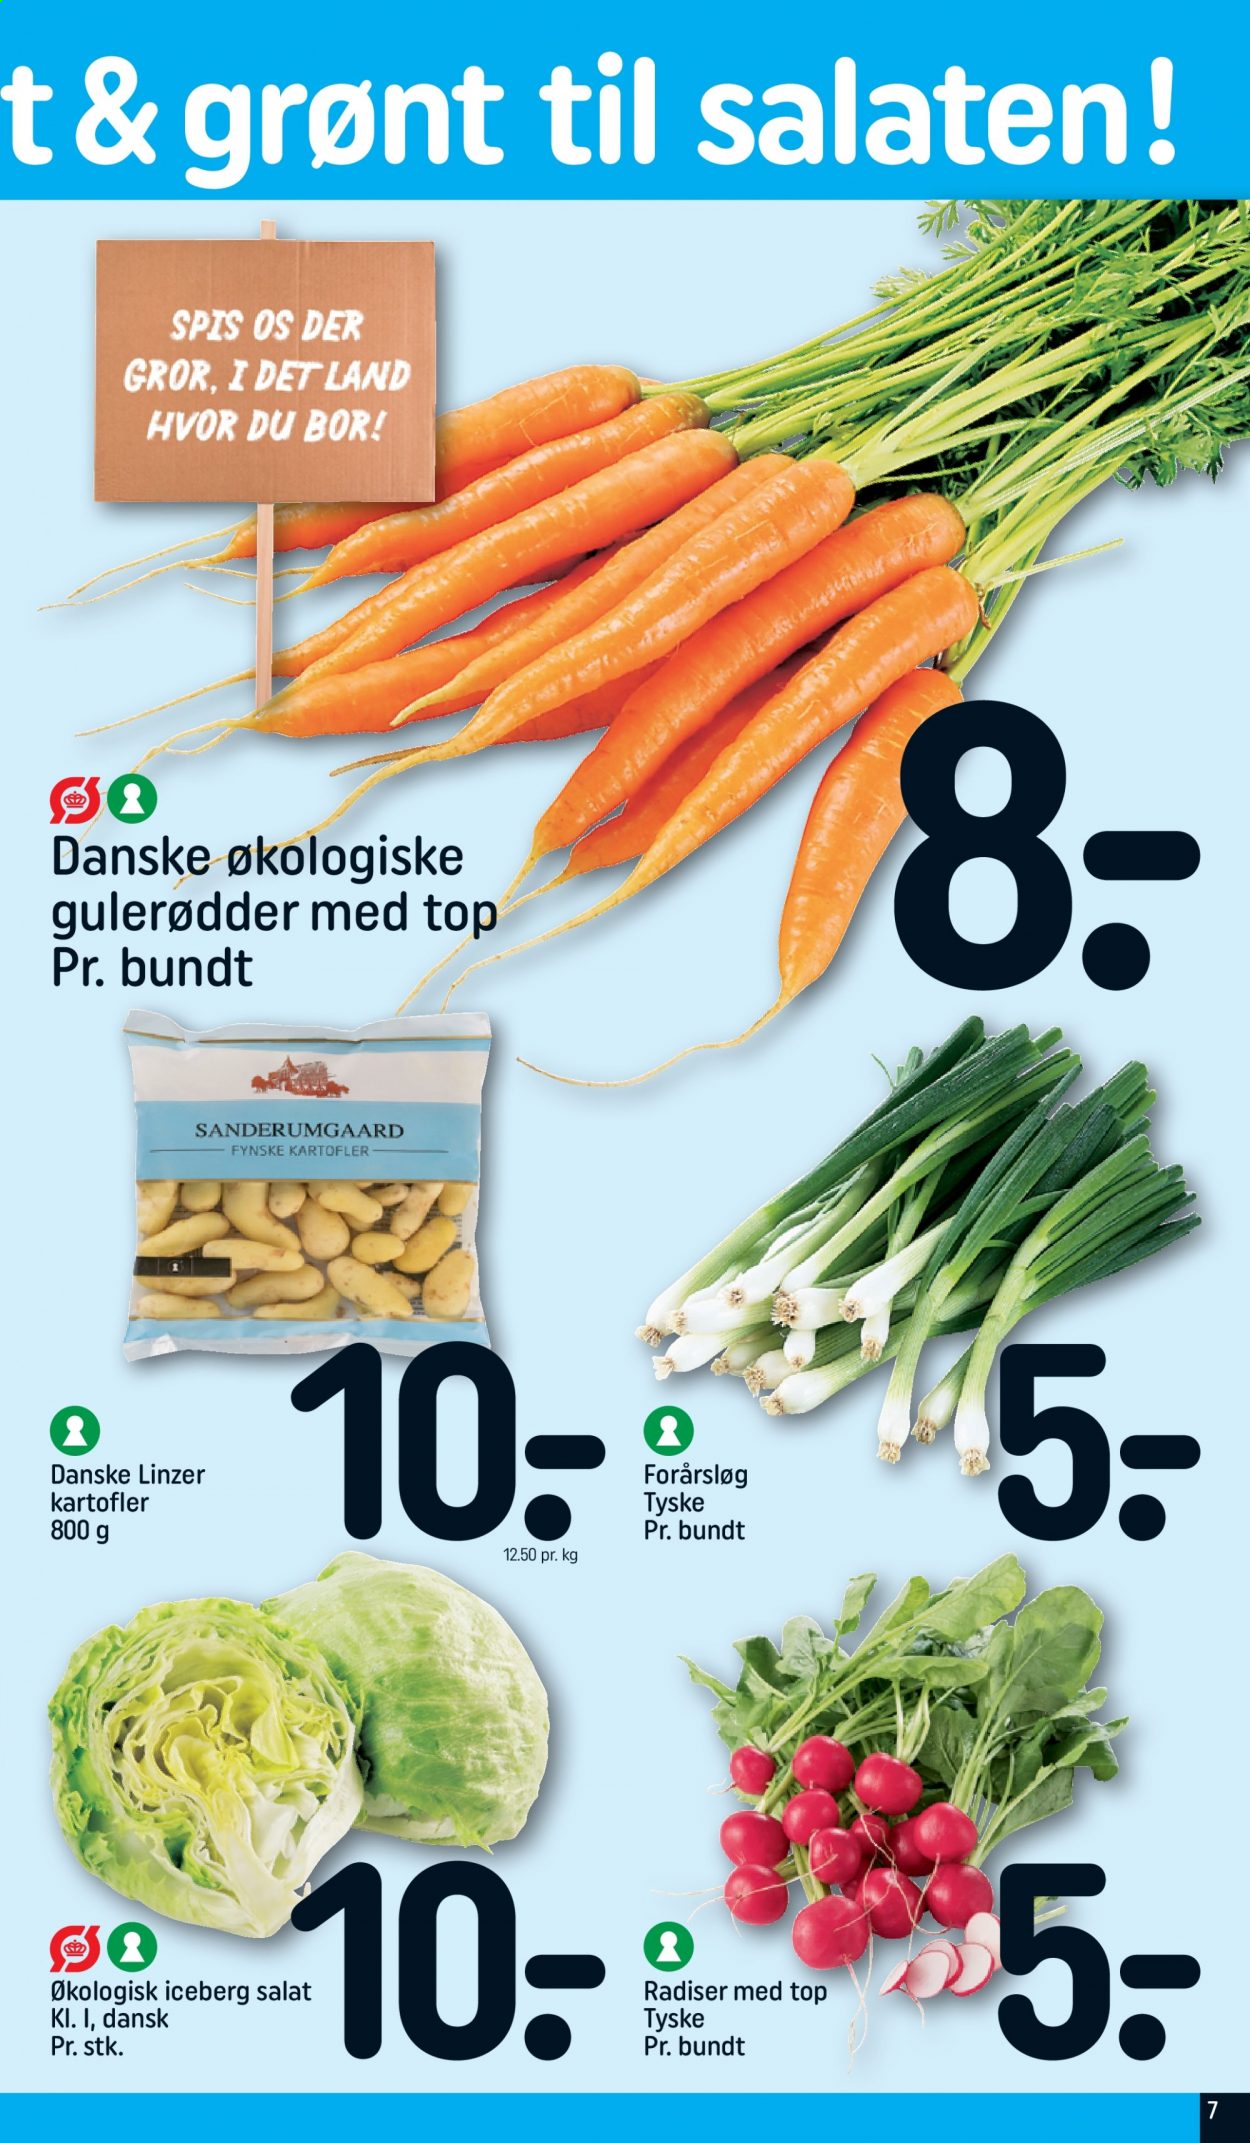 thumbnail - Rema 1000 tilbud  - 4.7.2021 - 10.7.2021 - tilbudsprodukter - forårsløg, gulerod, iceberg salat, kartofler, radiser, salat. Side 7.